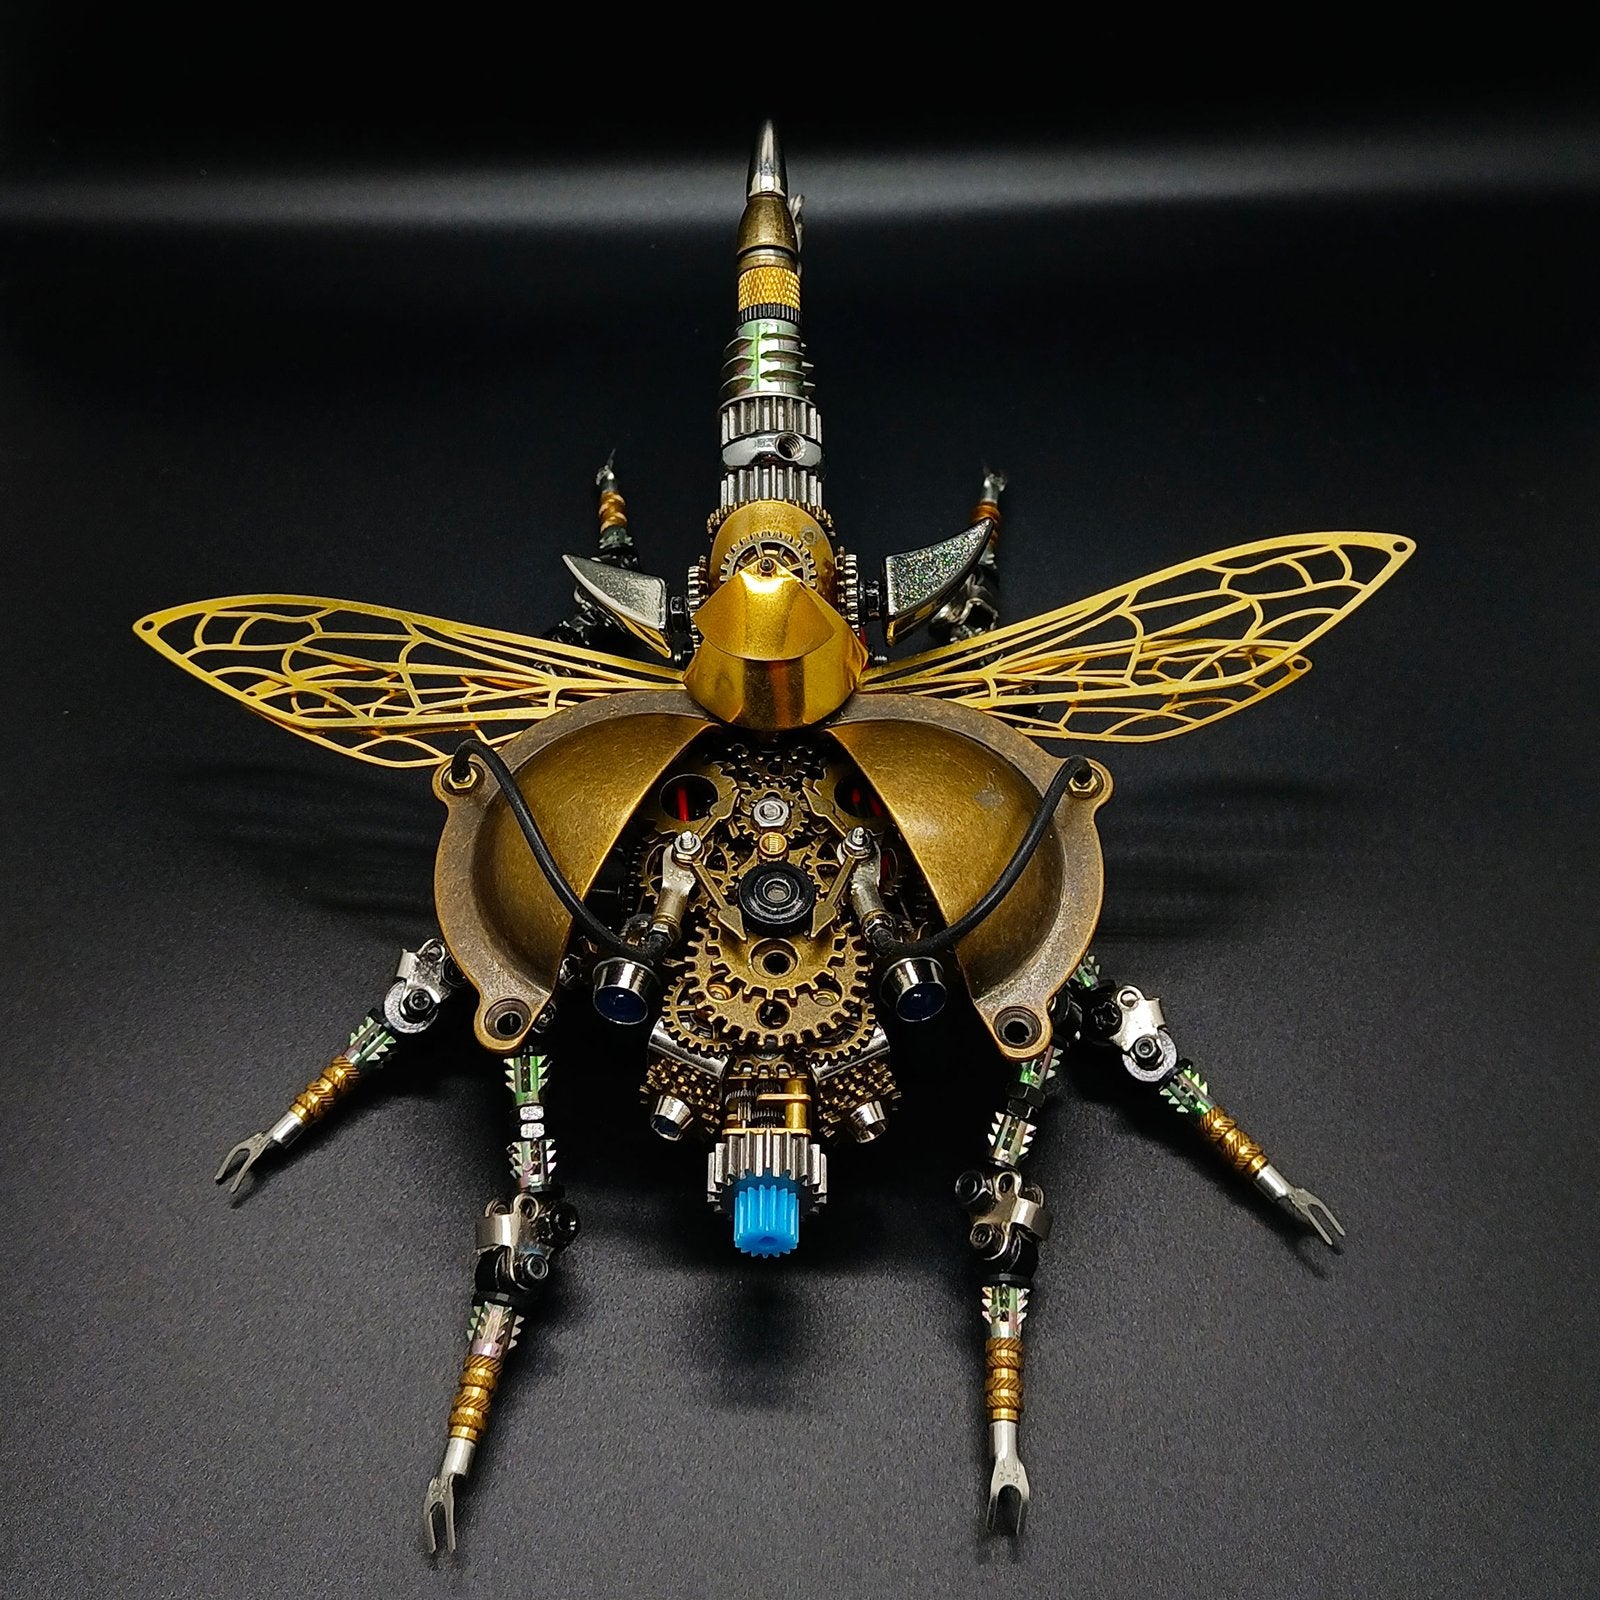 Assembly DIY 3D Metal Mechanical War Beetle With Sound Control Light